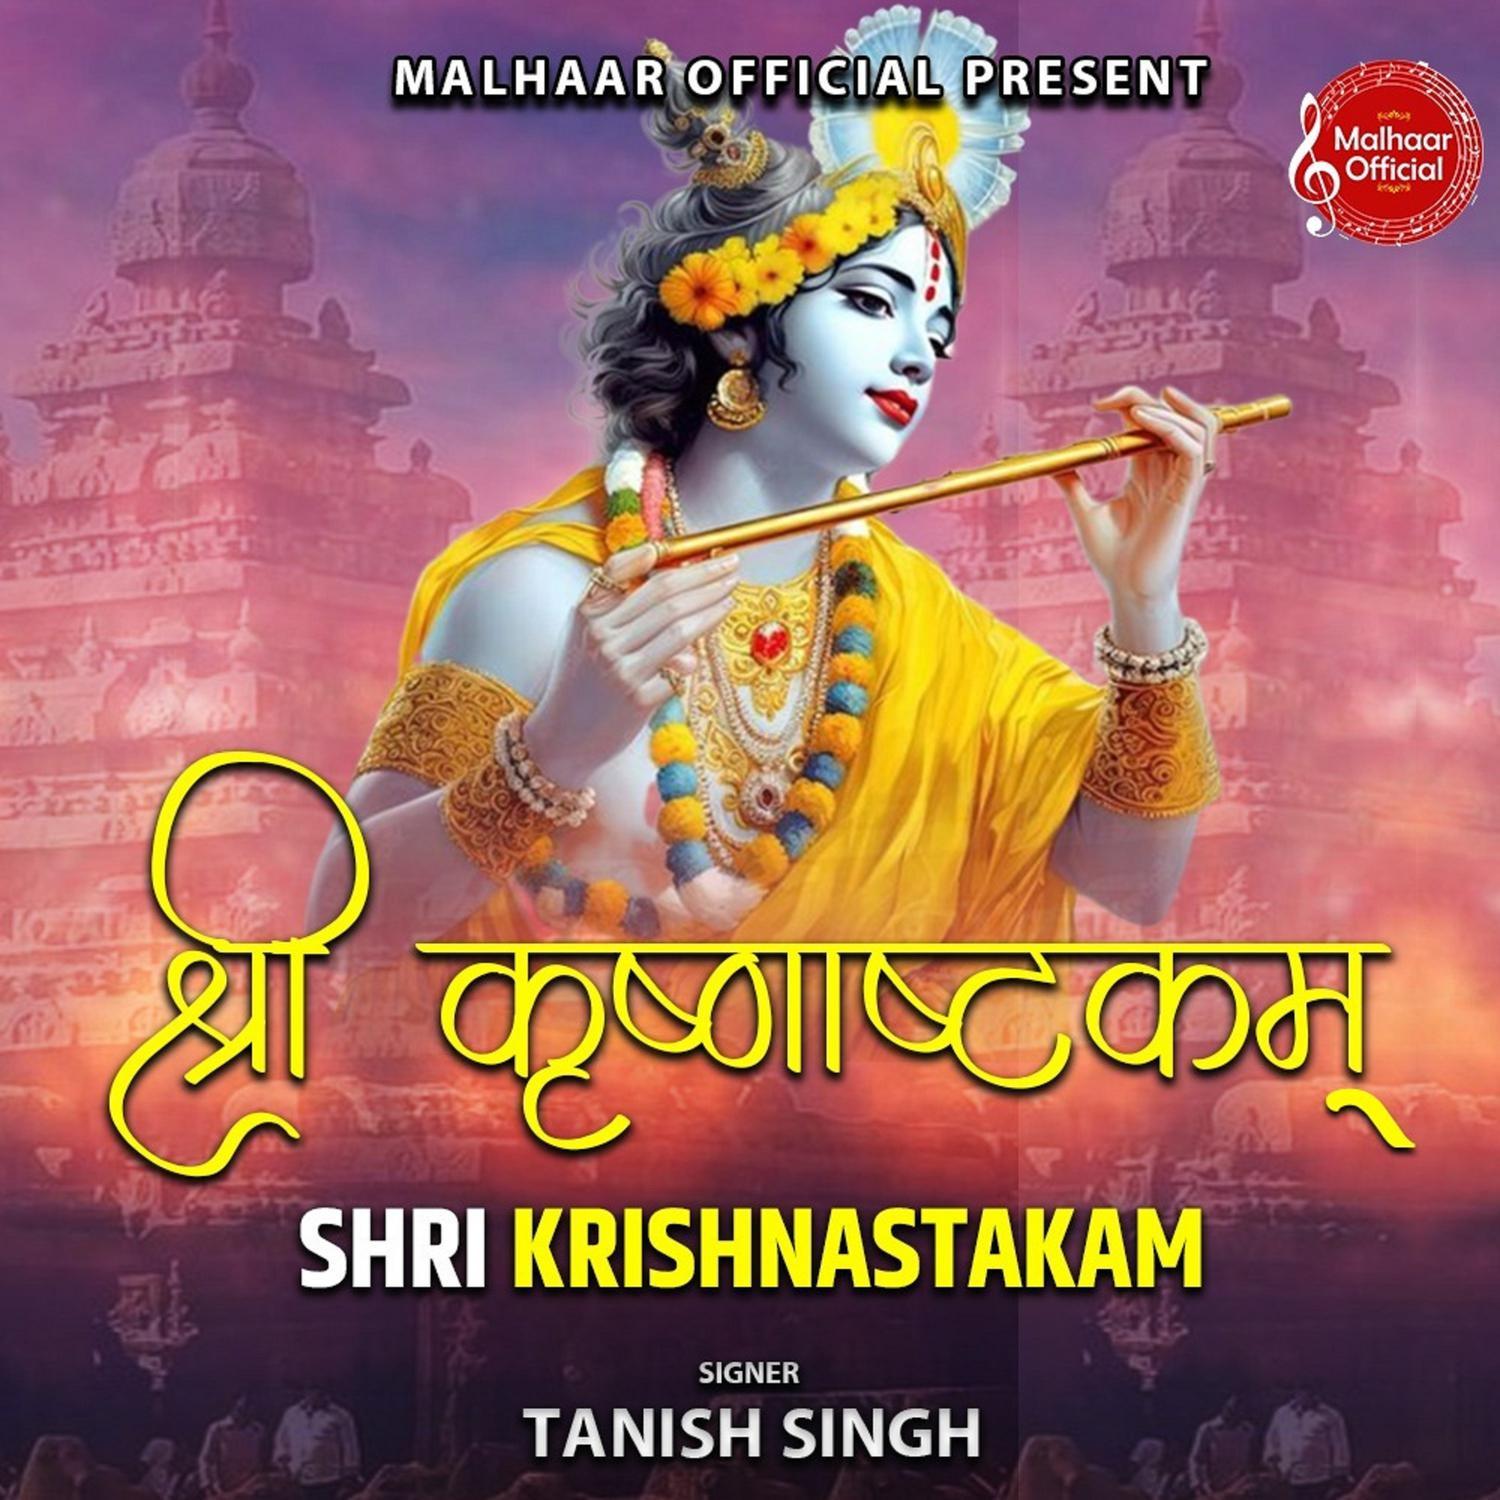 Tanish singh - Shri Krishnastakam